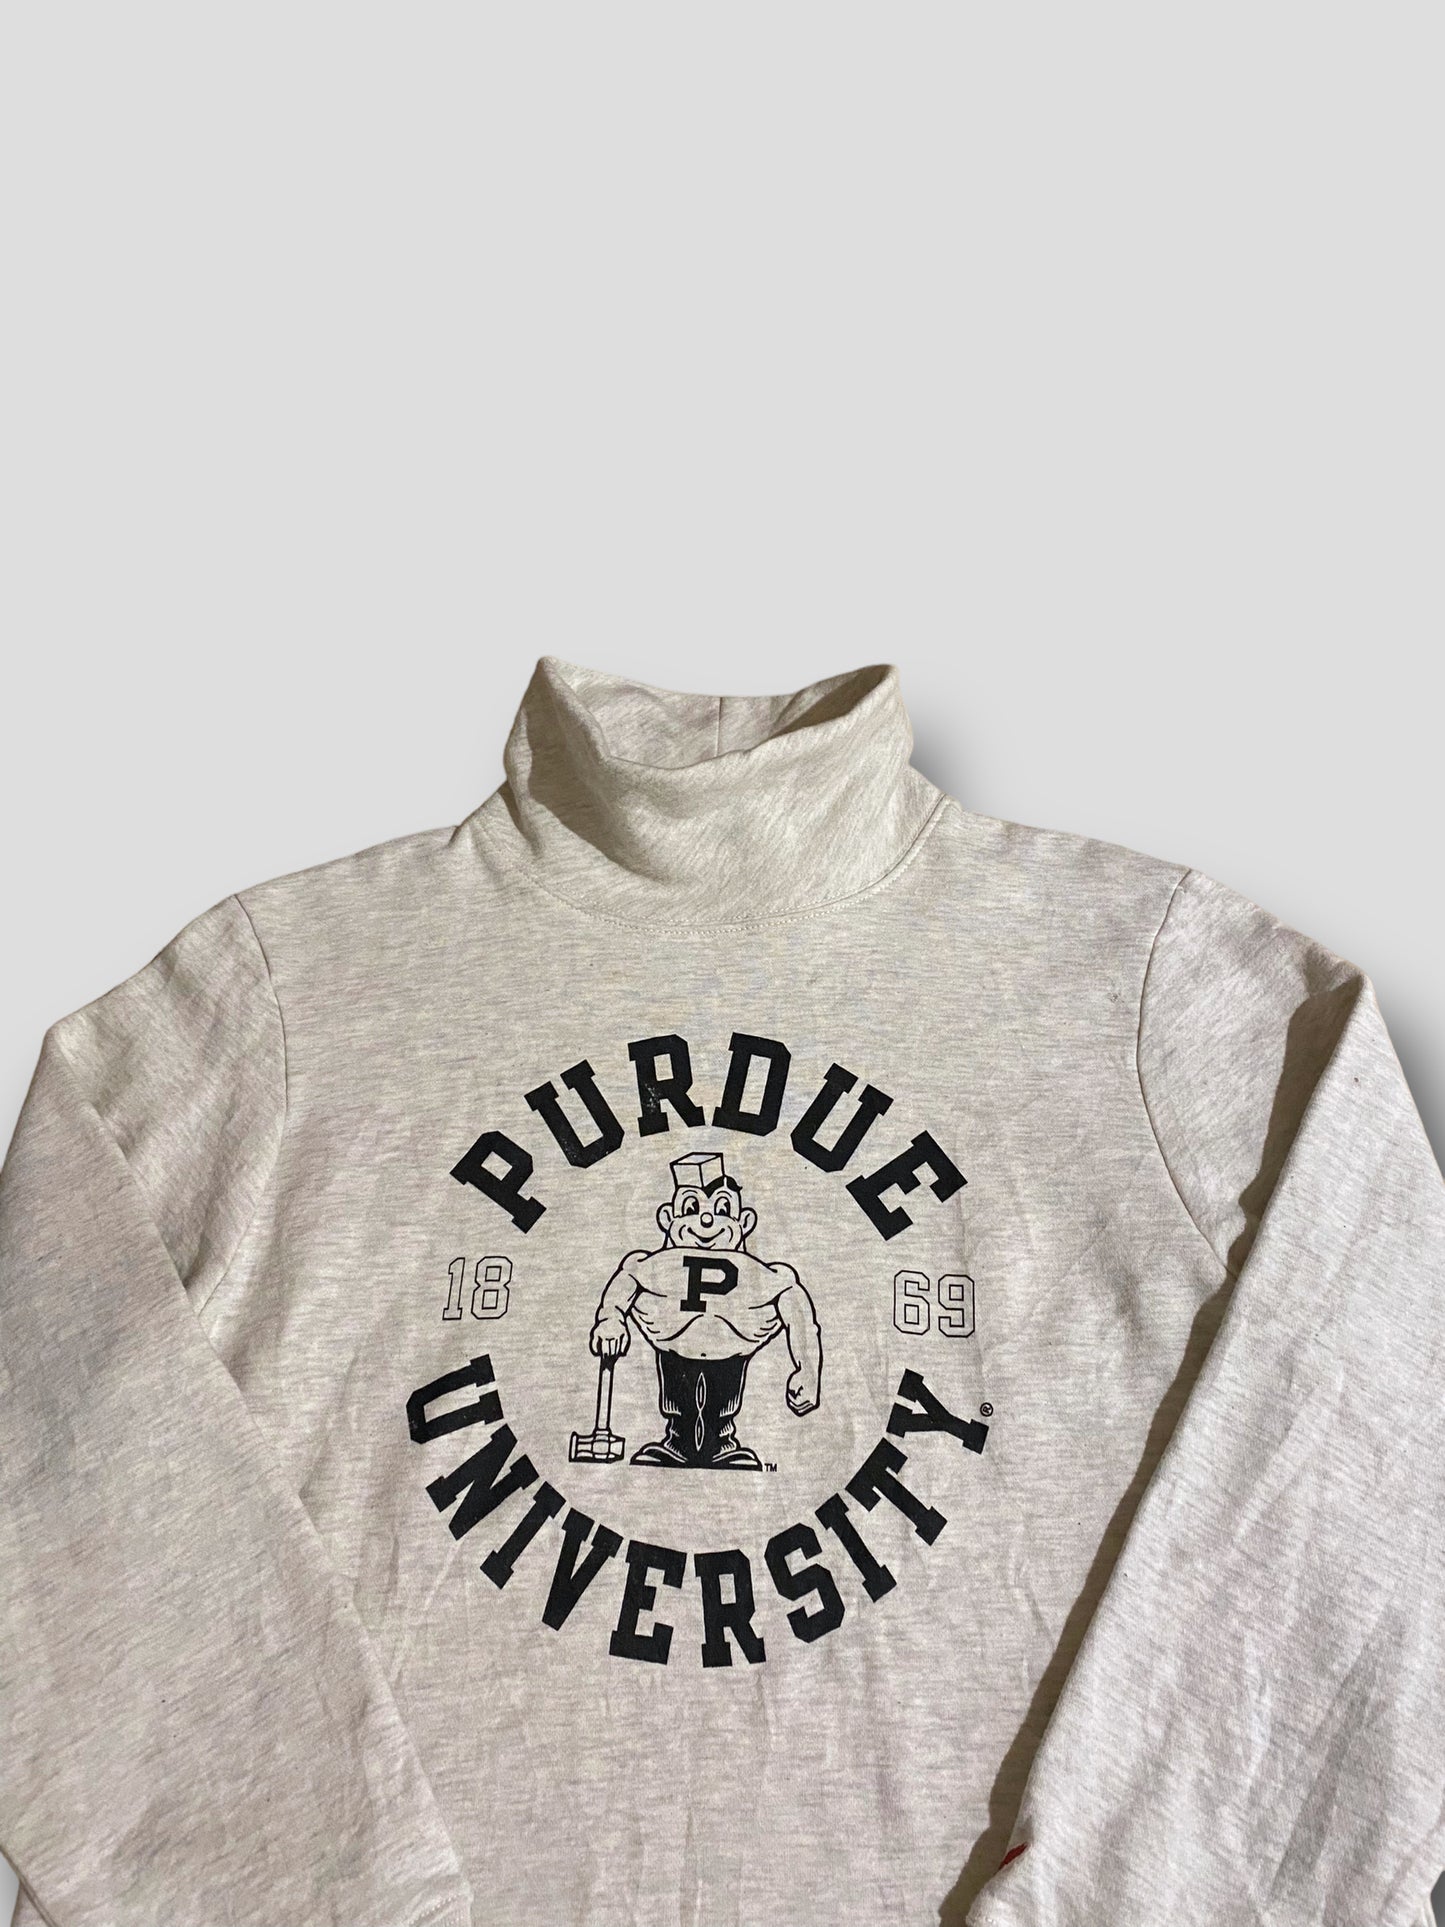 Purdue University Poolocollege (S/M)